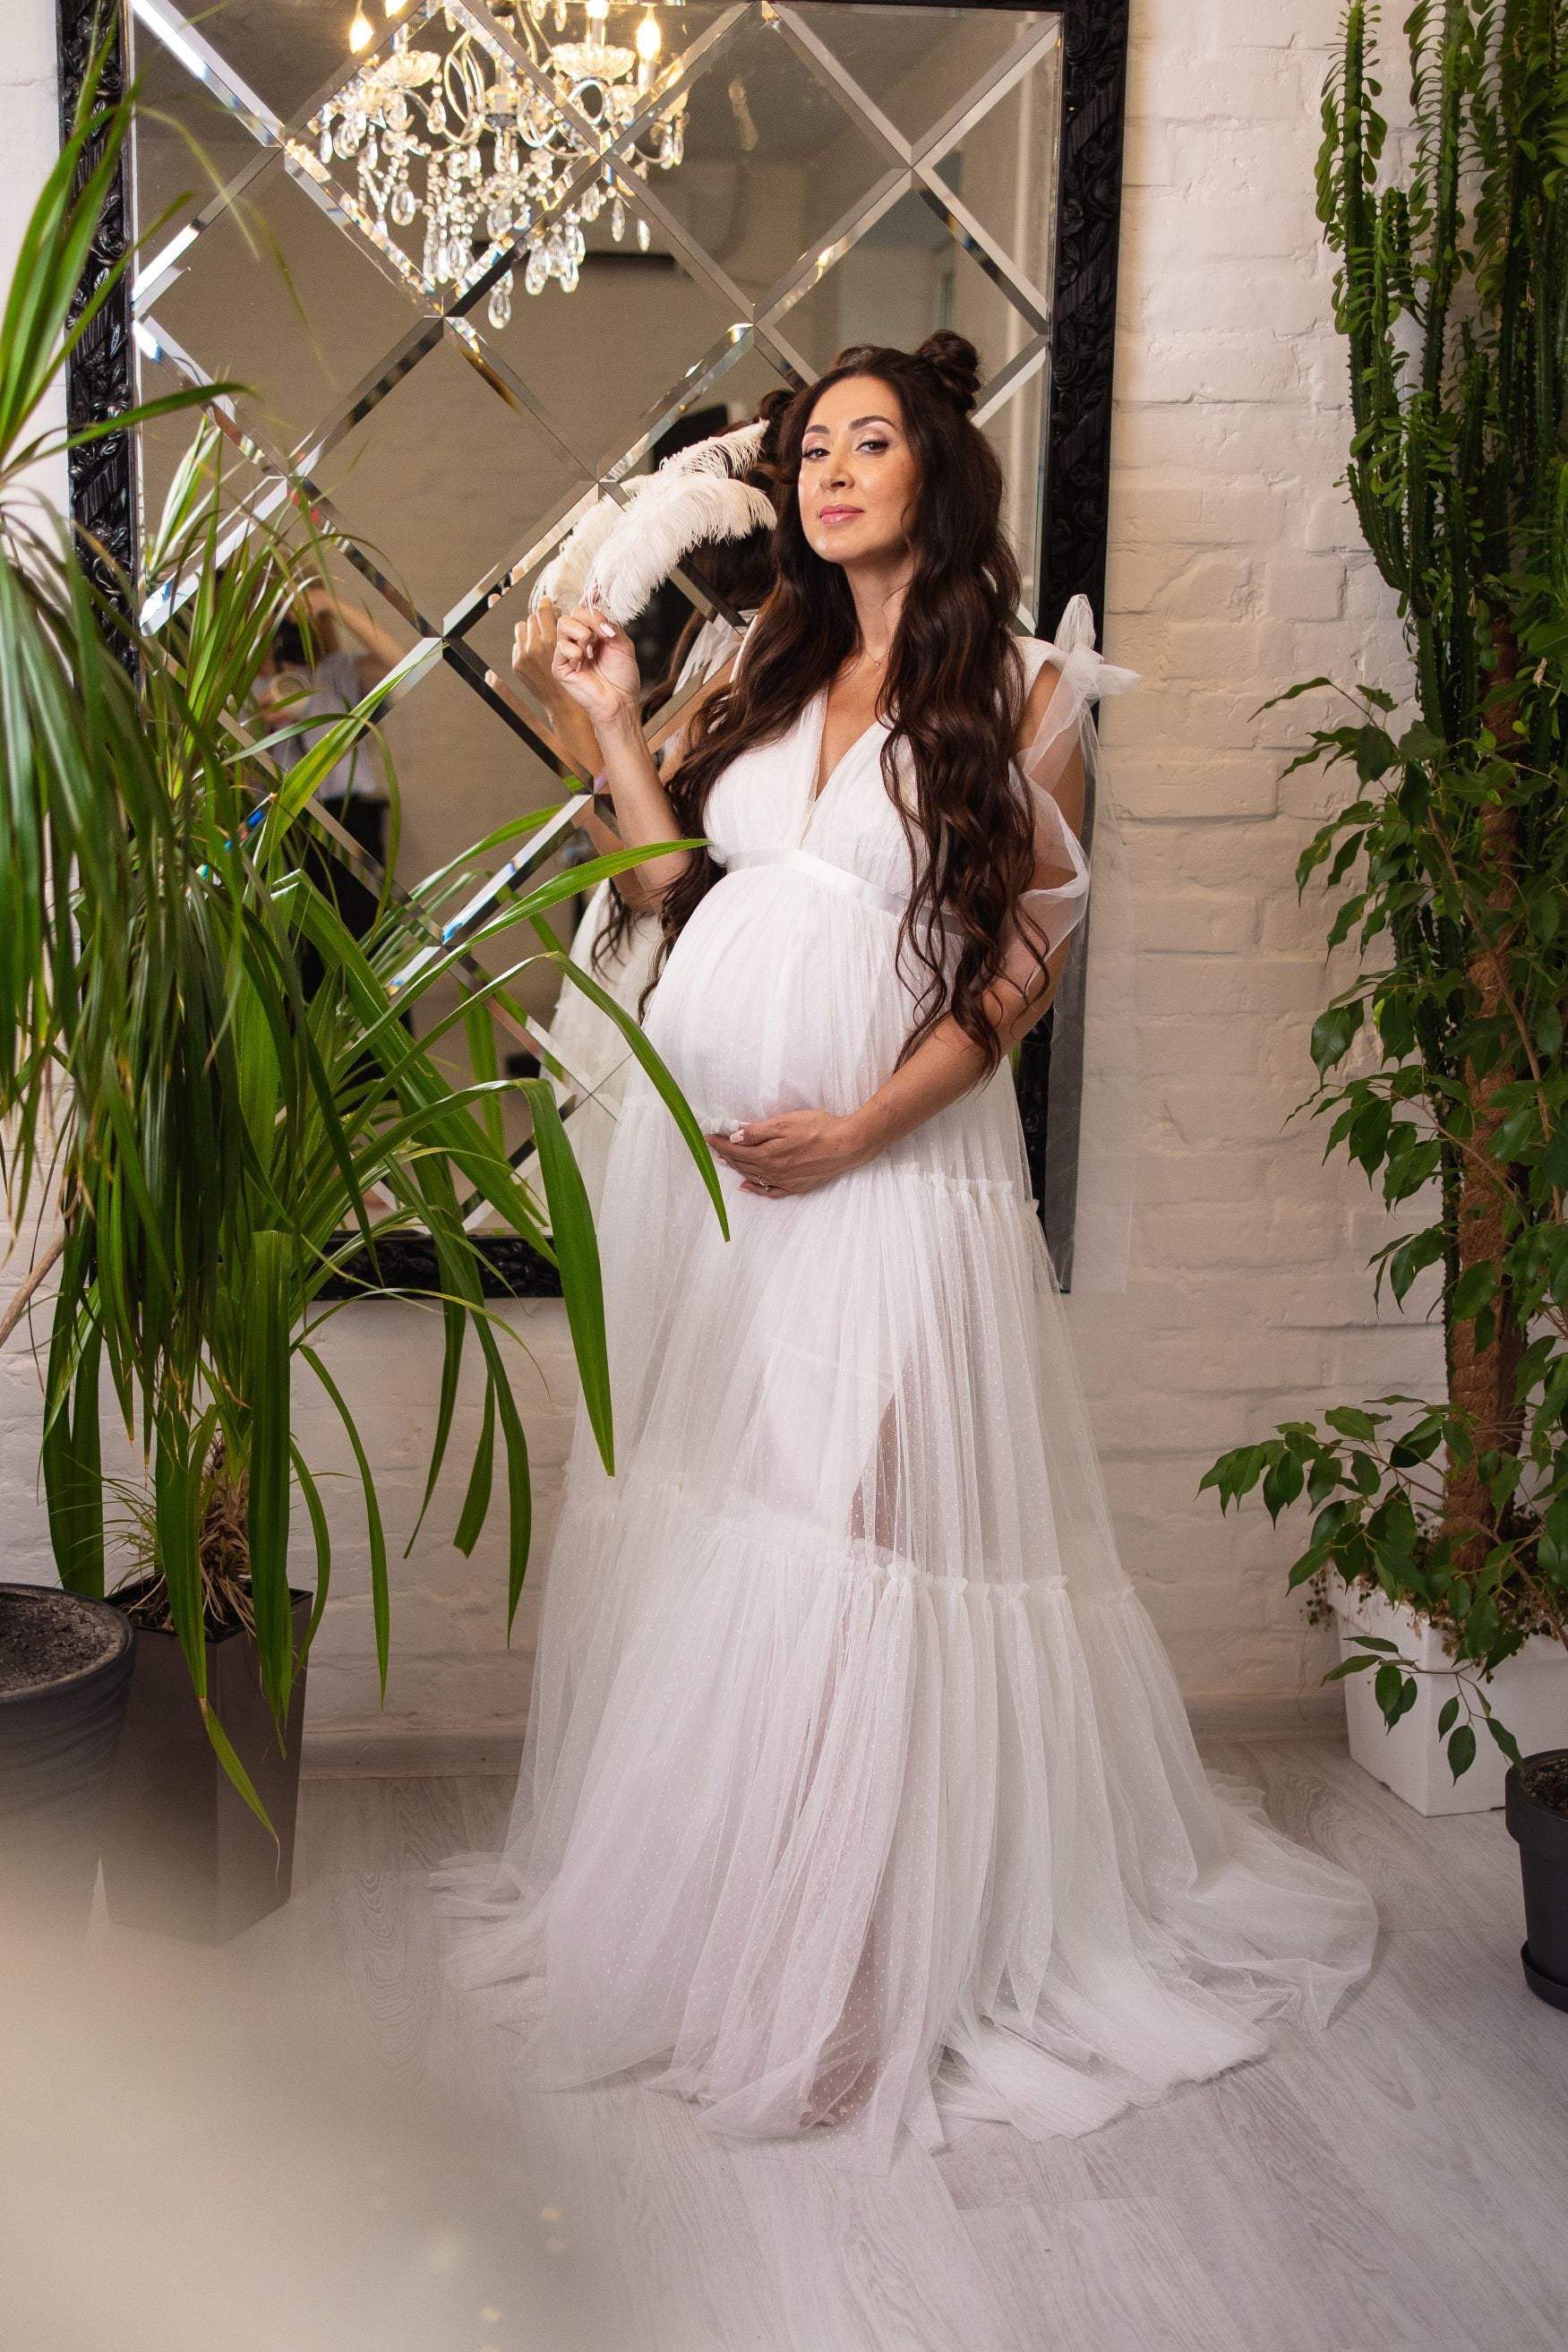 white maternity dress